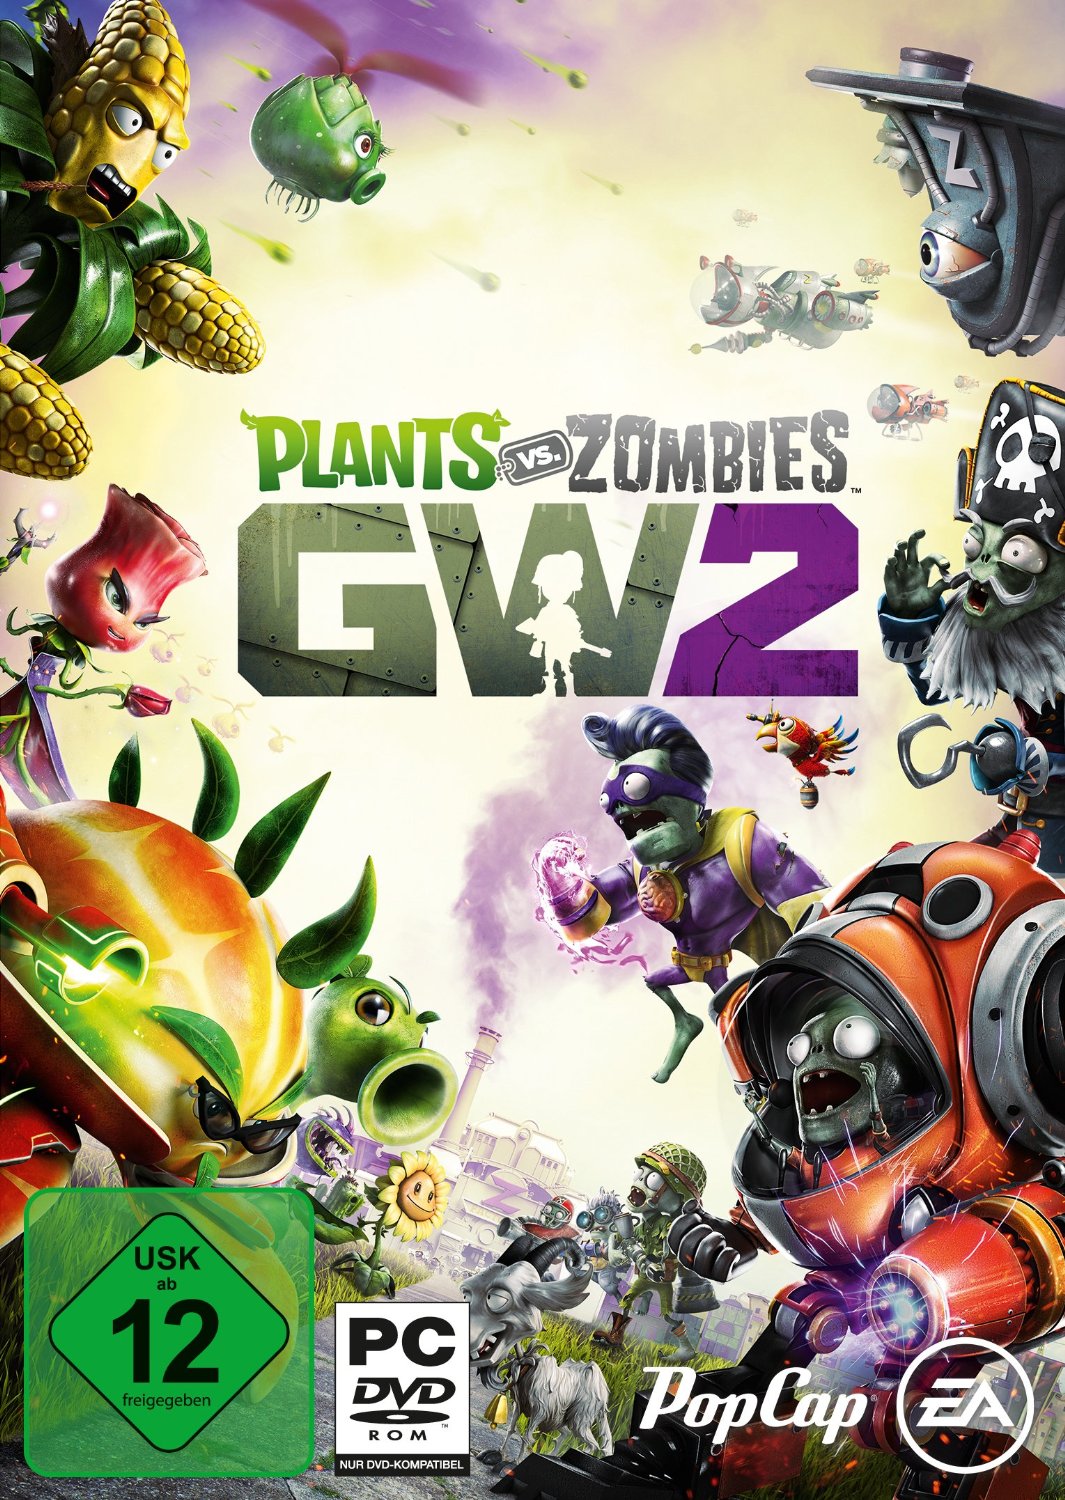 plants vs zombies garden warfare 2 pc download full version